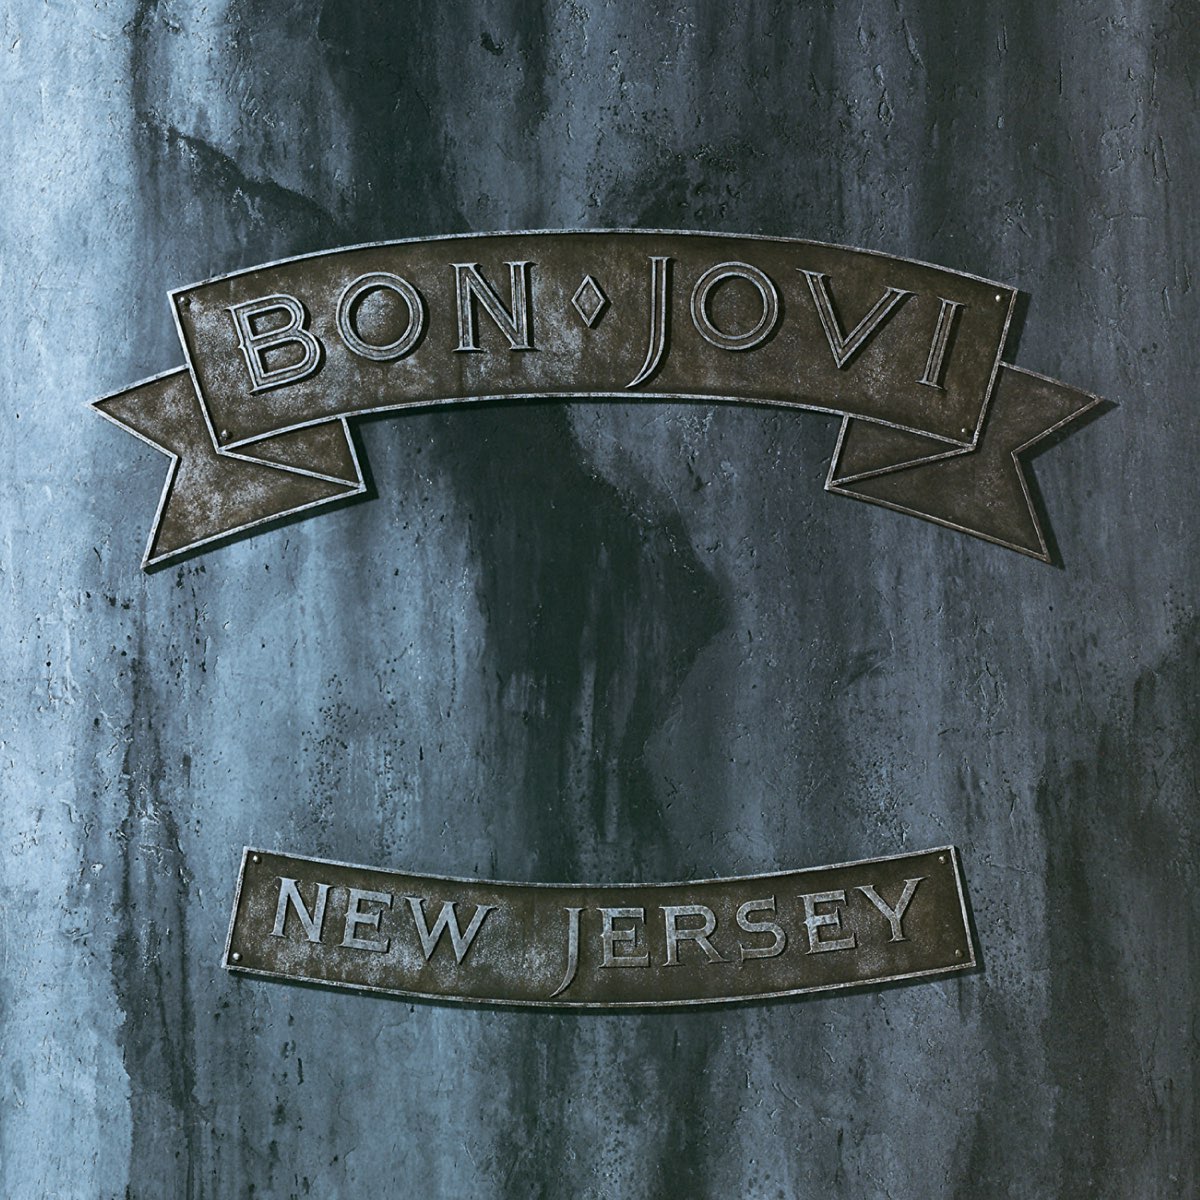 ‎New Jersey by Bon Jovi on Apple Music